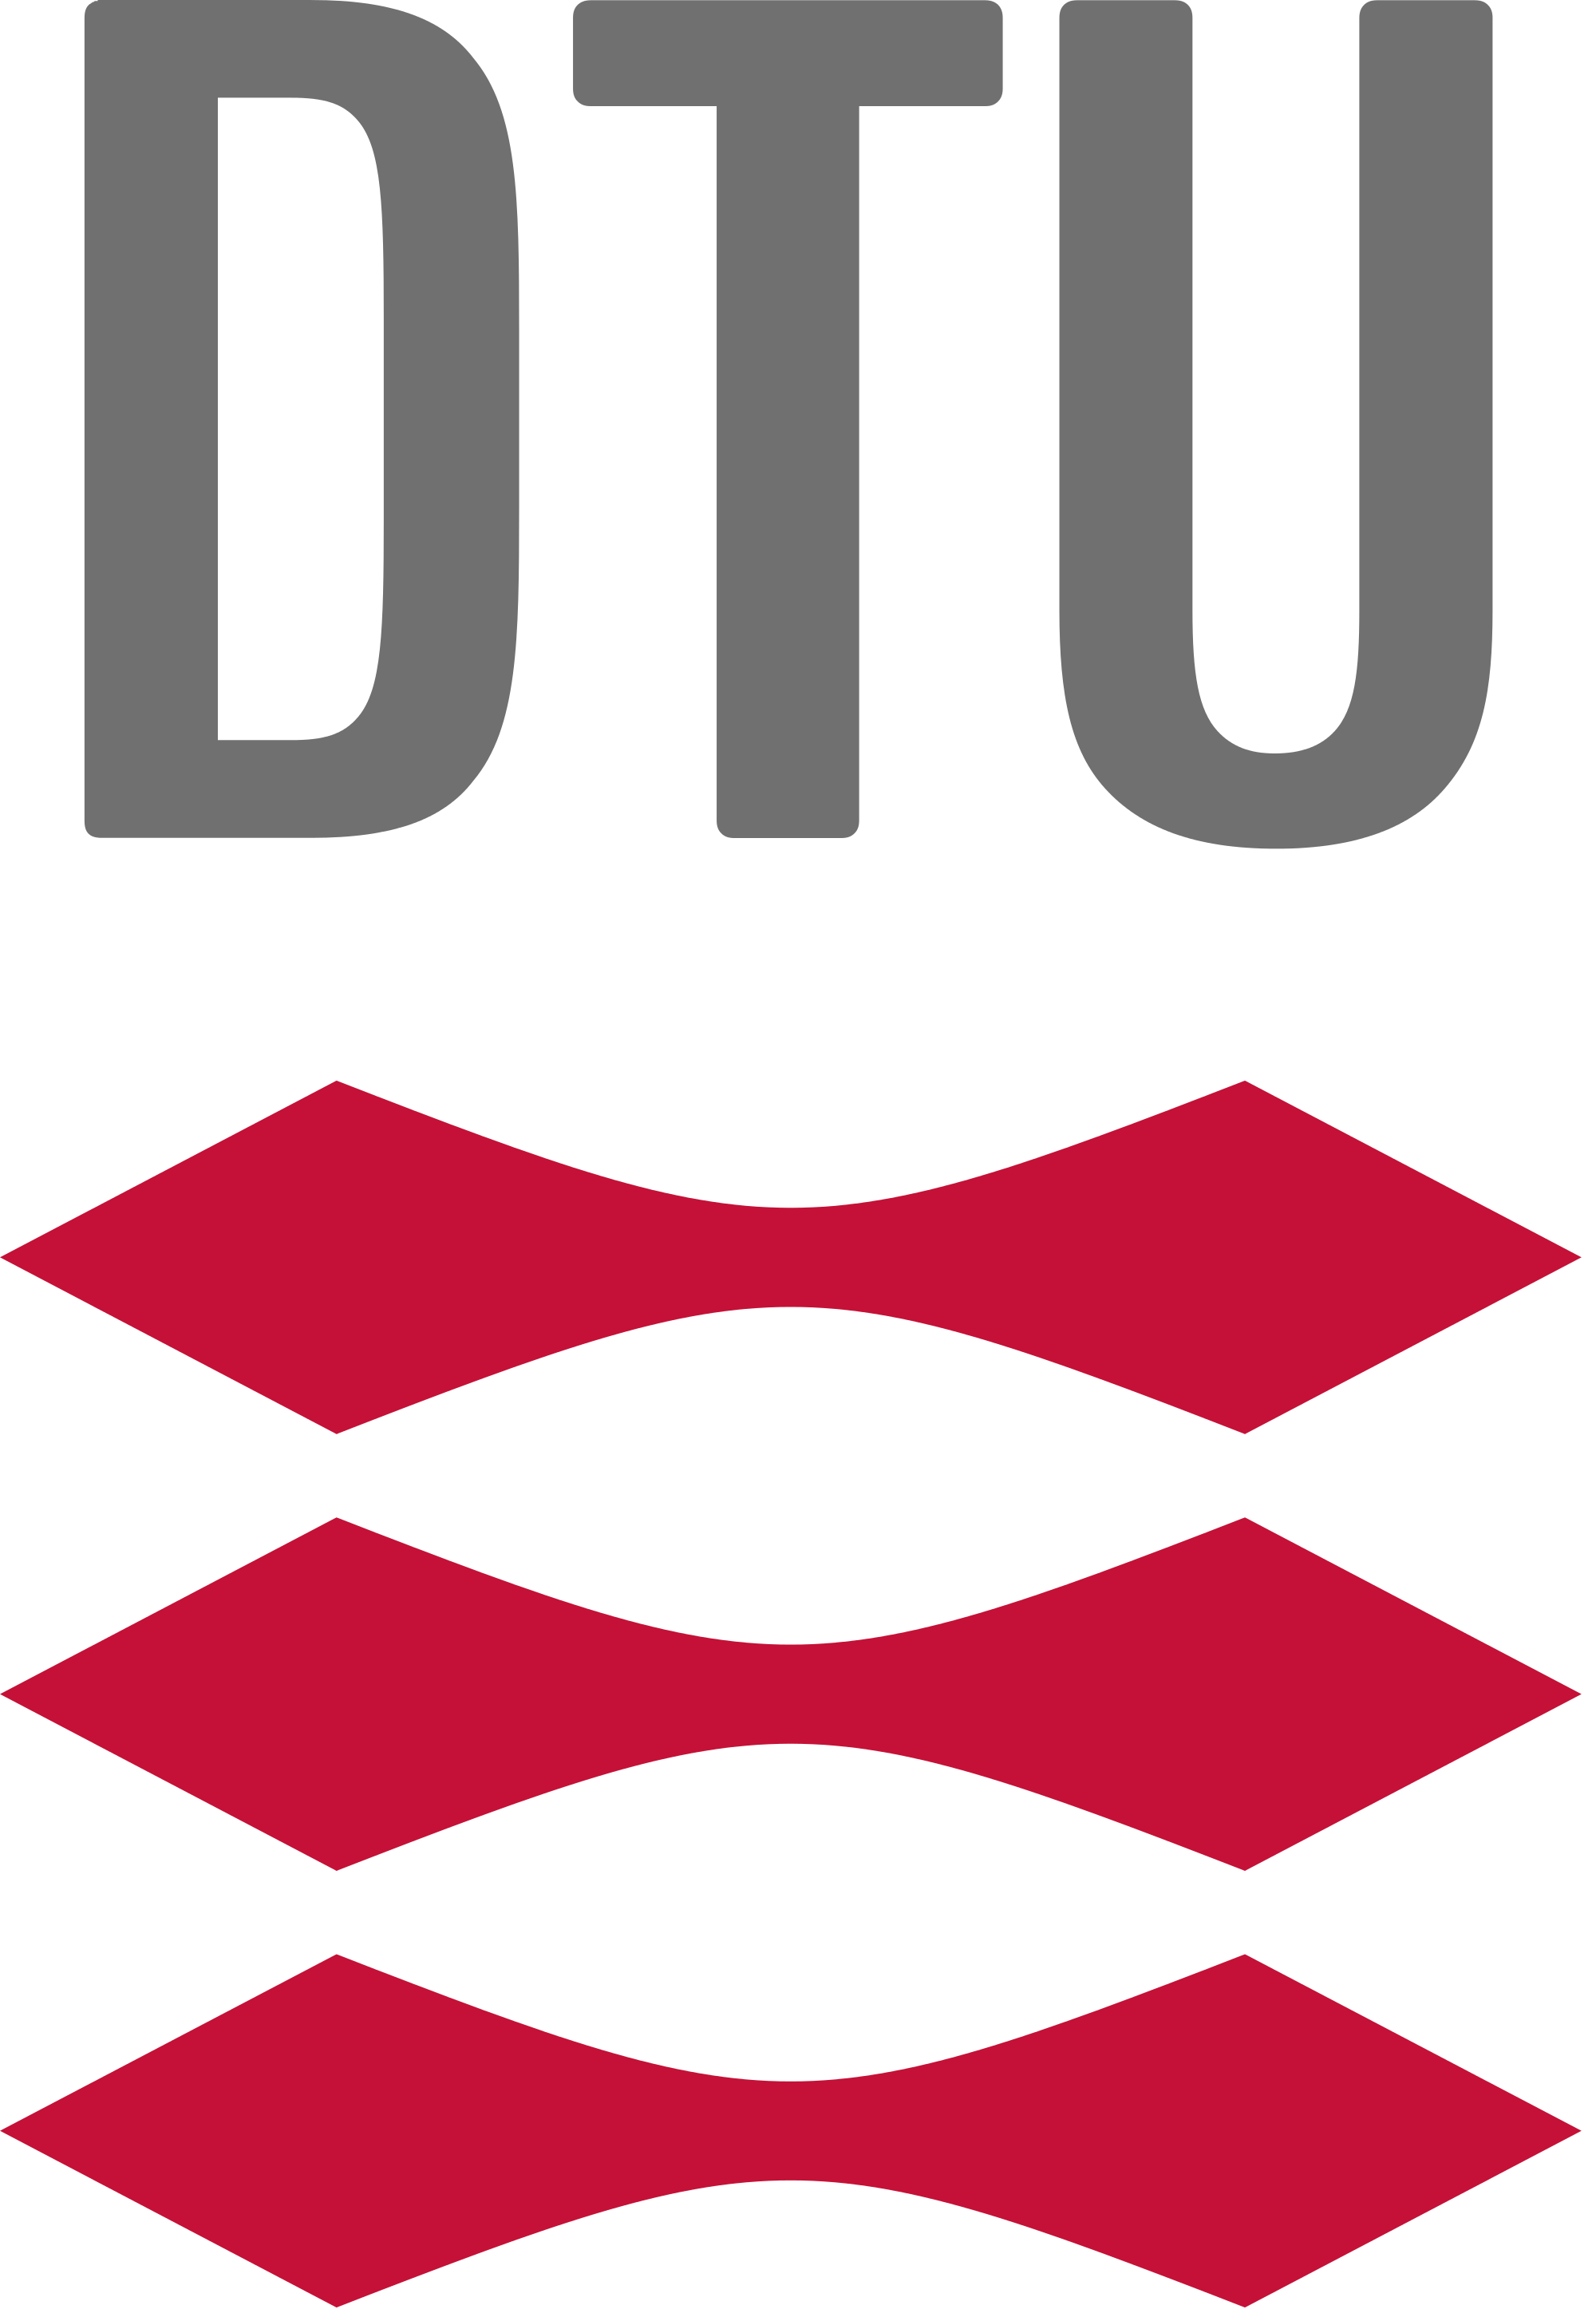 Technical University of Denmark | Technical university, University logo ...